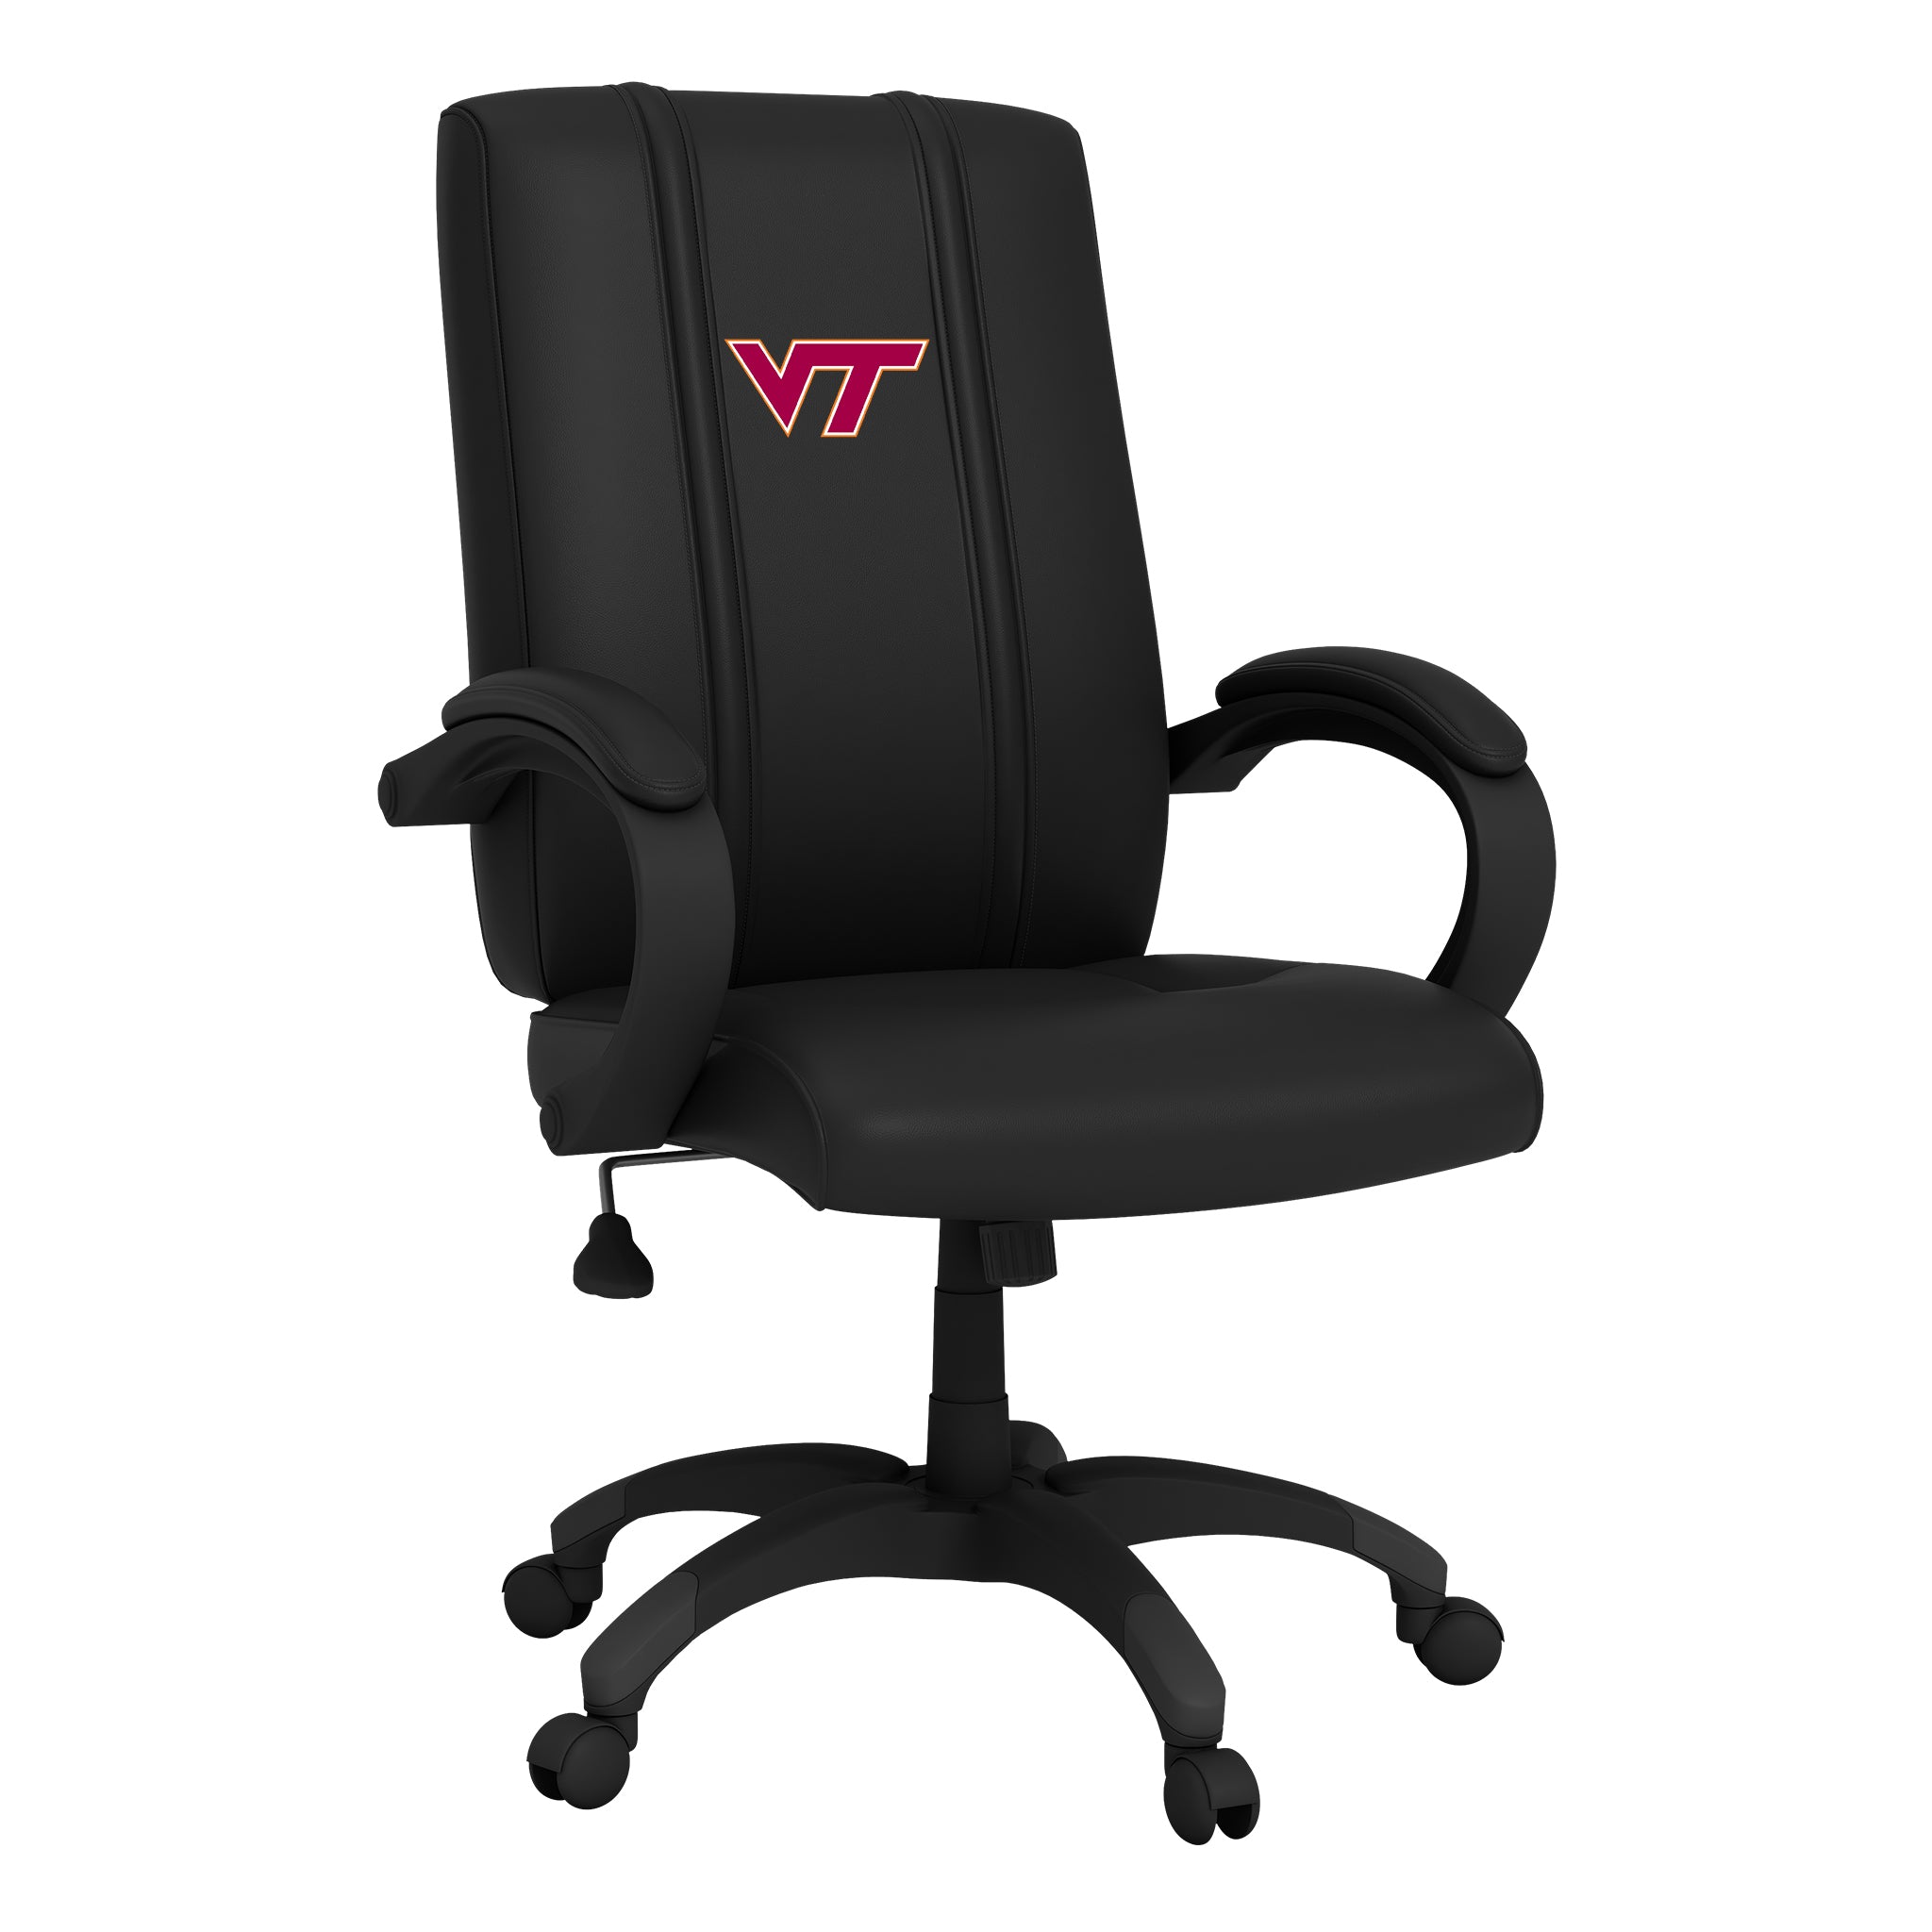 Virginia Tech Hokies Office Chair 1000 with Virginia Tech Hokies Logo